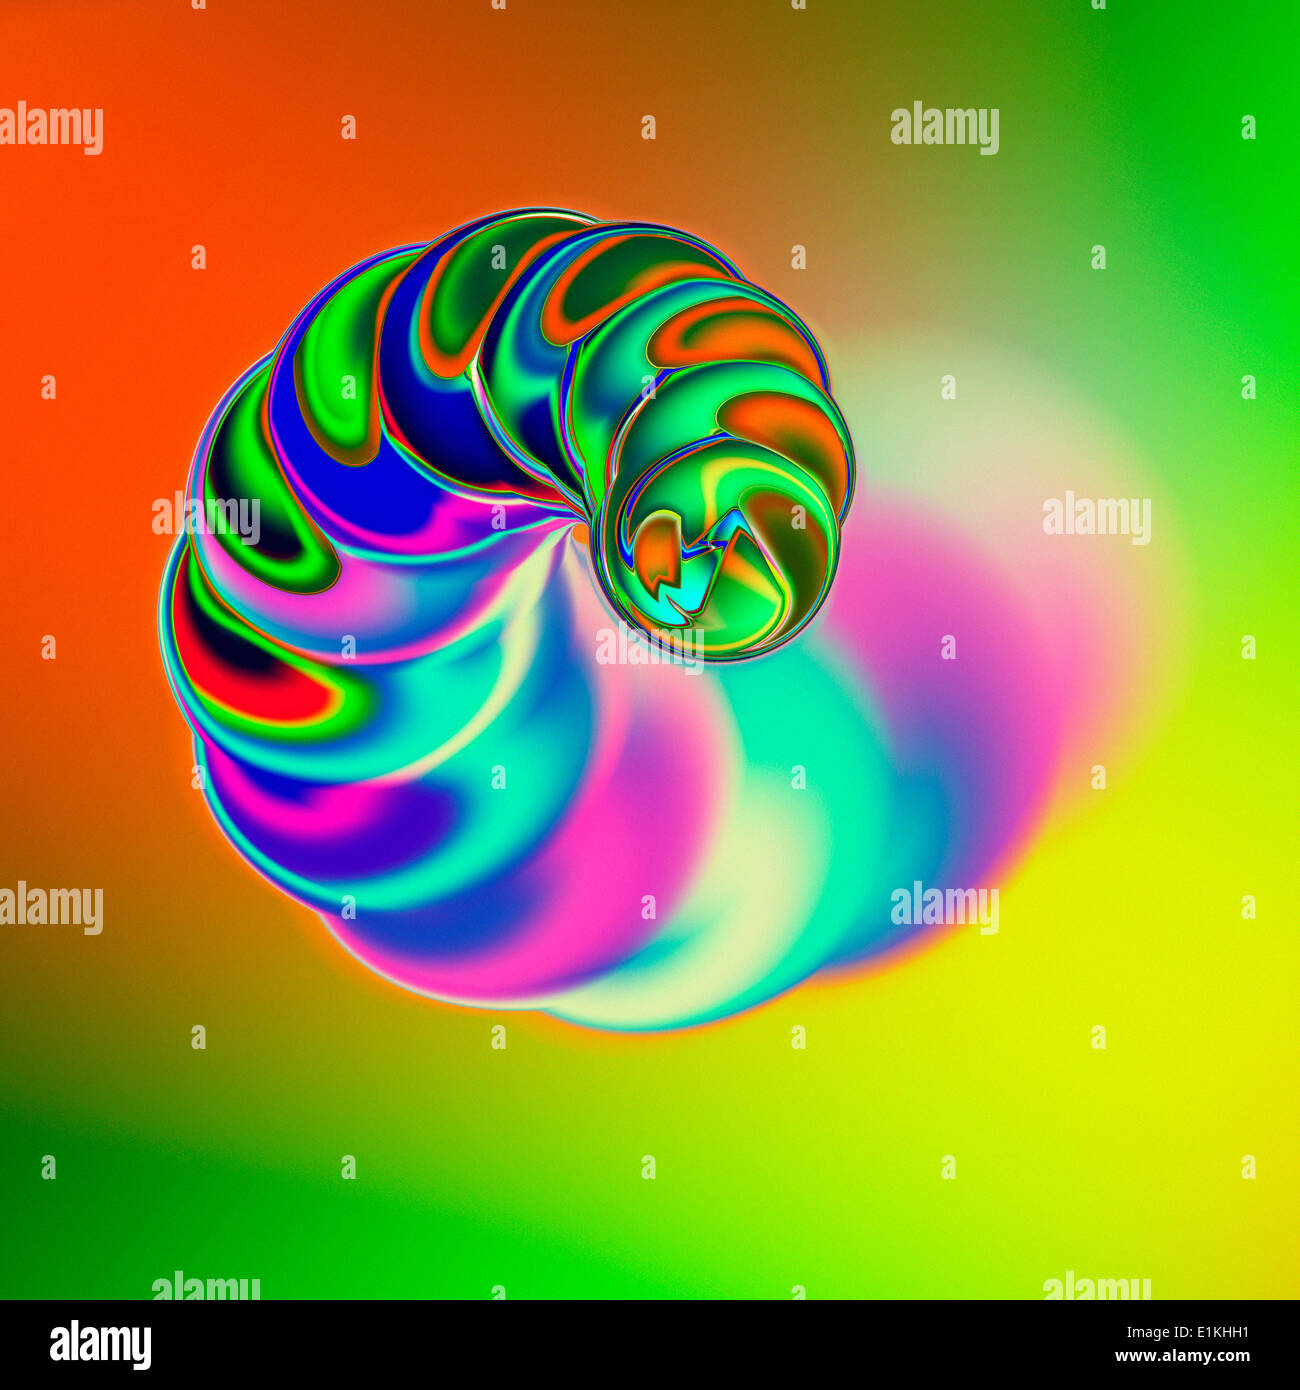 Artwork of a spiral shape. Stock Photo